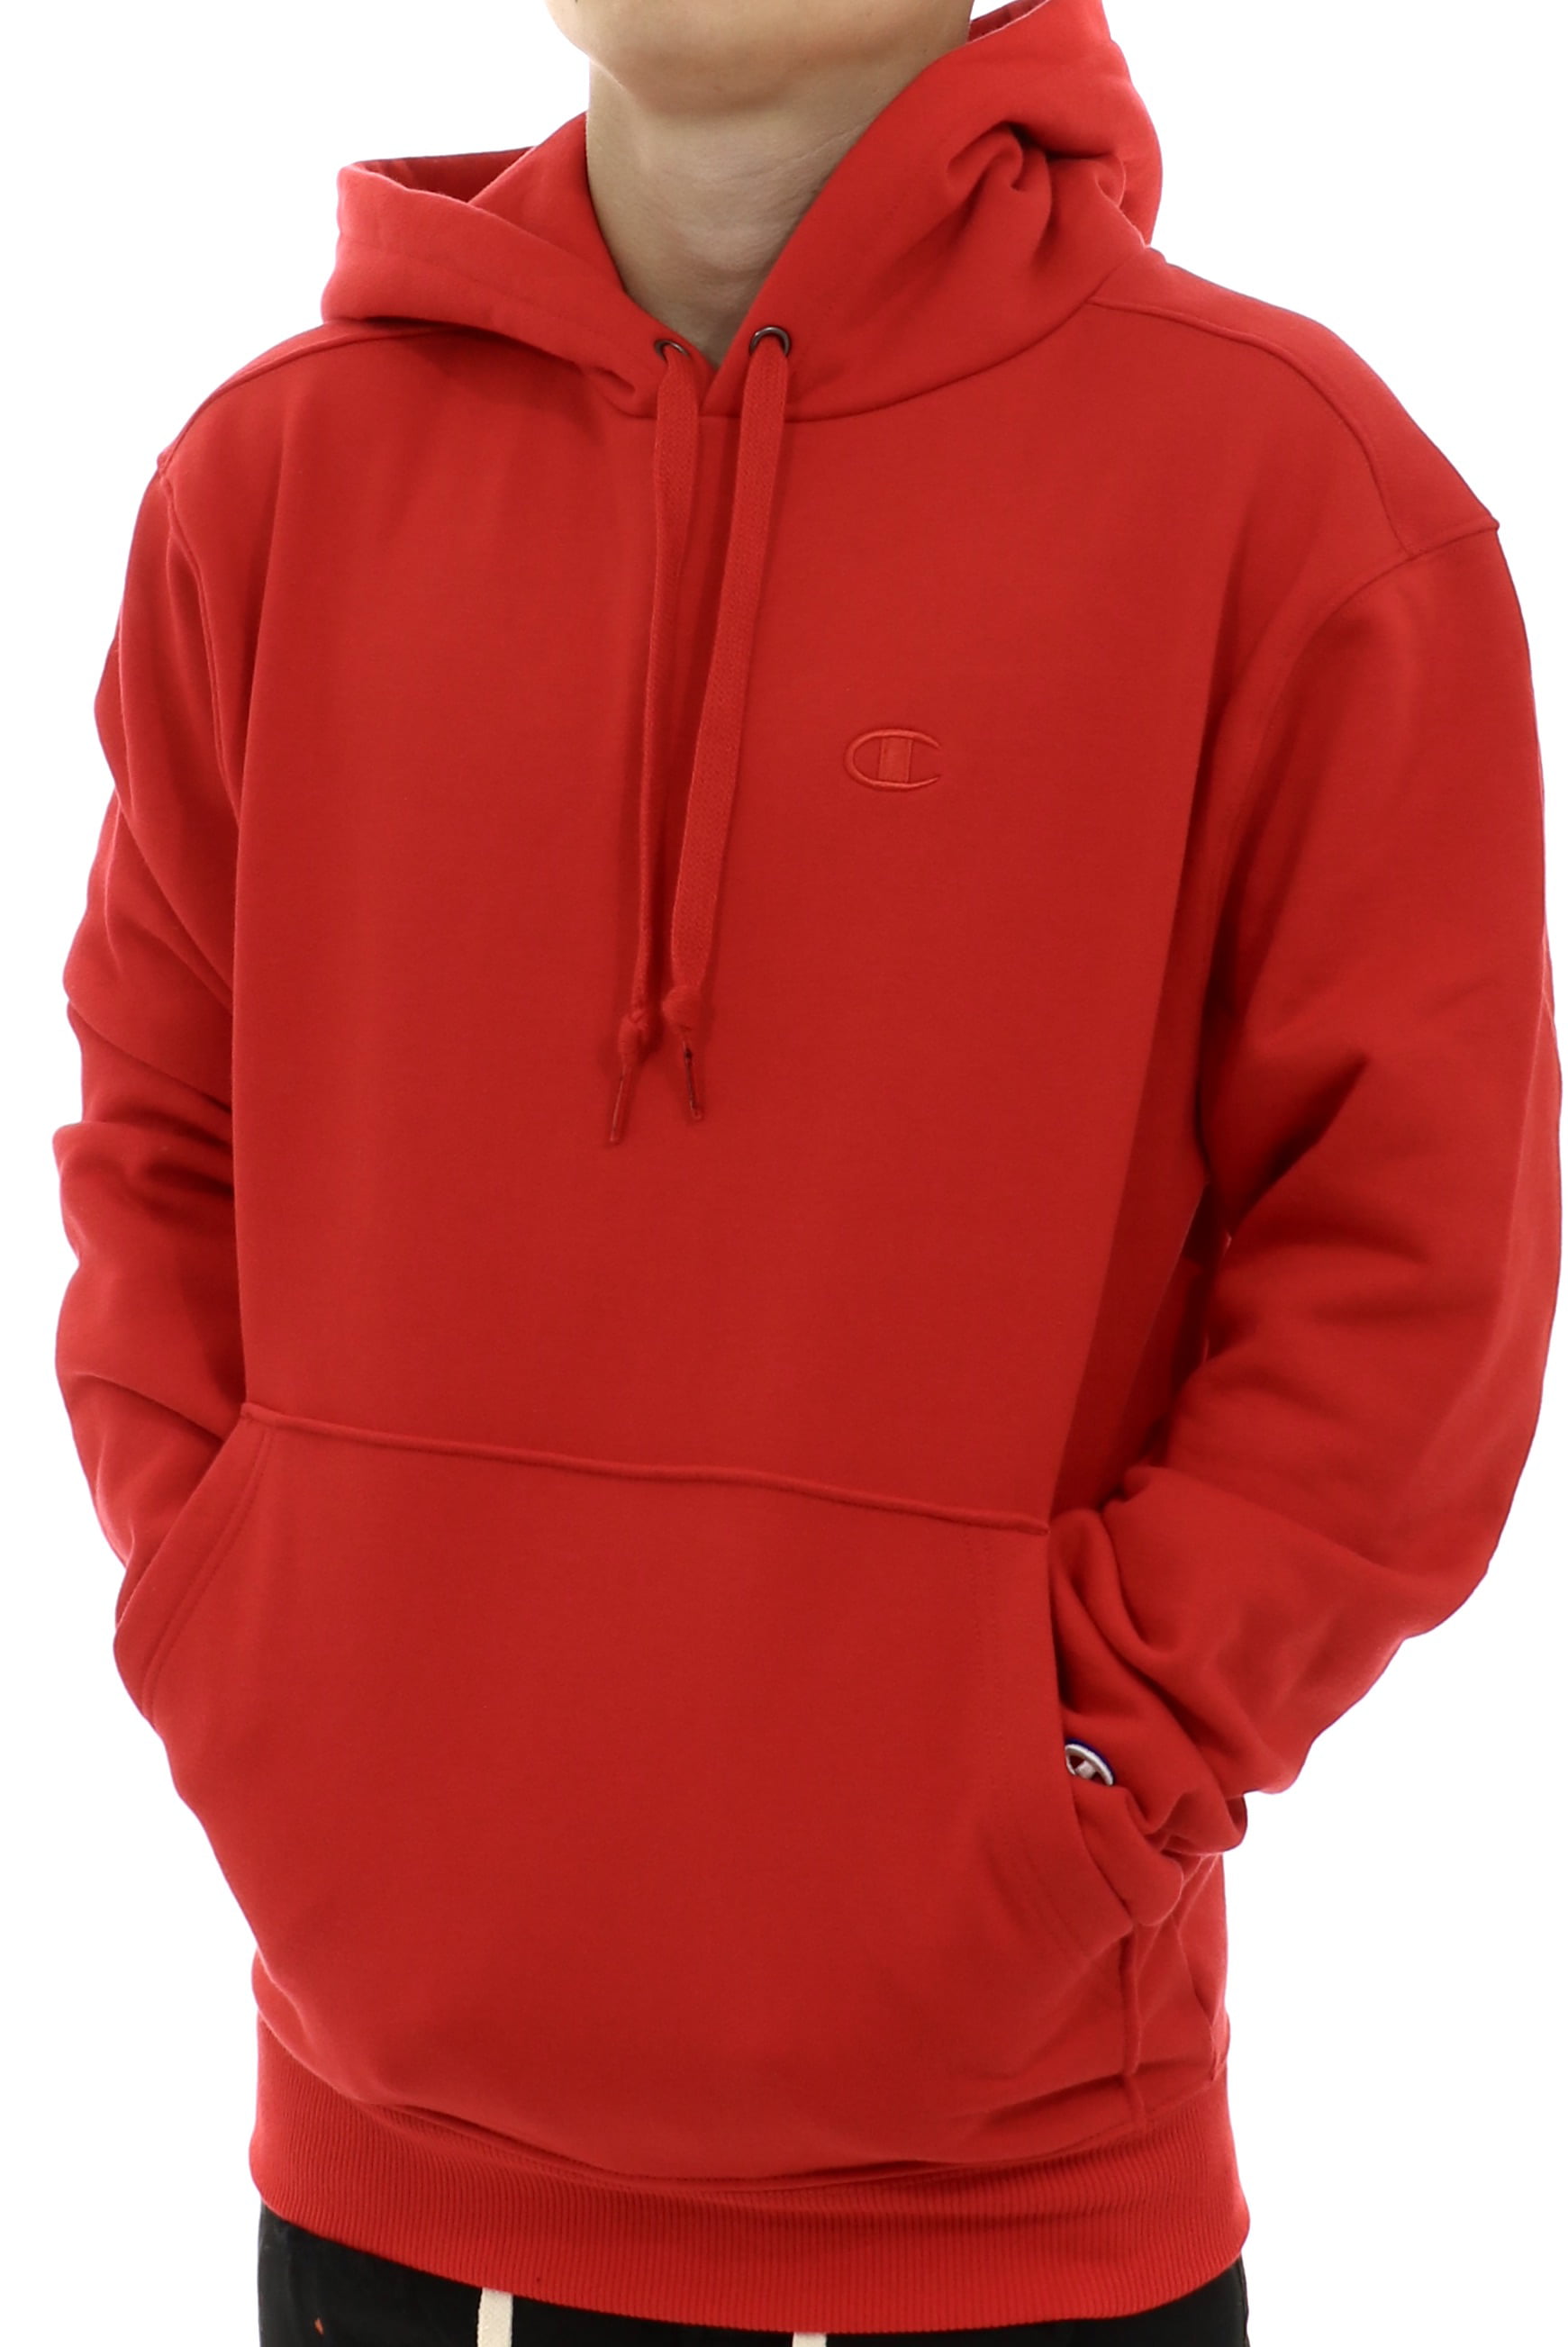 Champion Mens Original Super Fleece Sweatshirt with Conehead Style Hood  RED-2XL